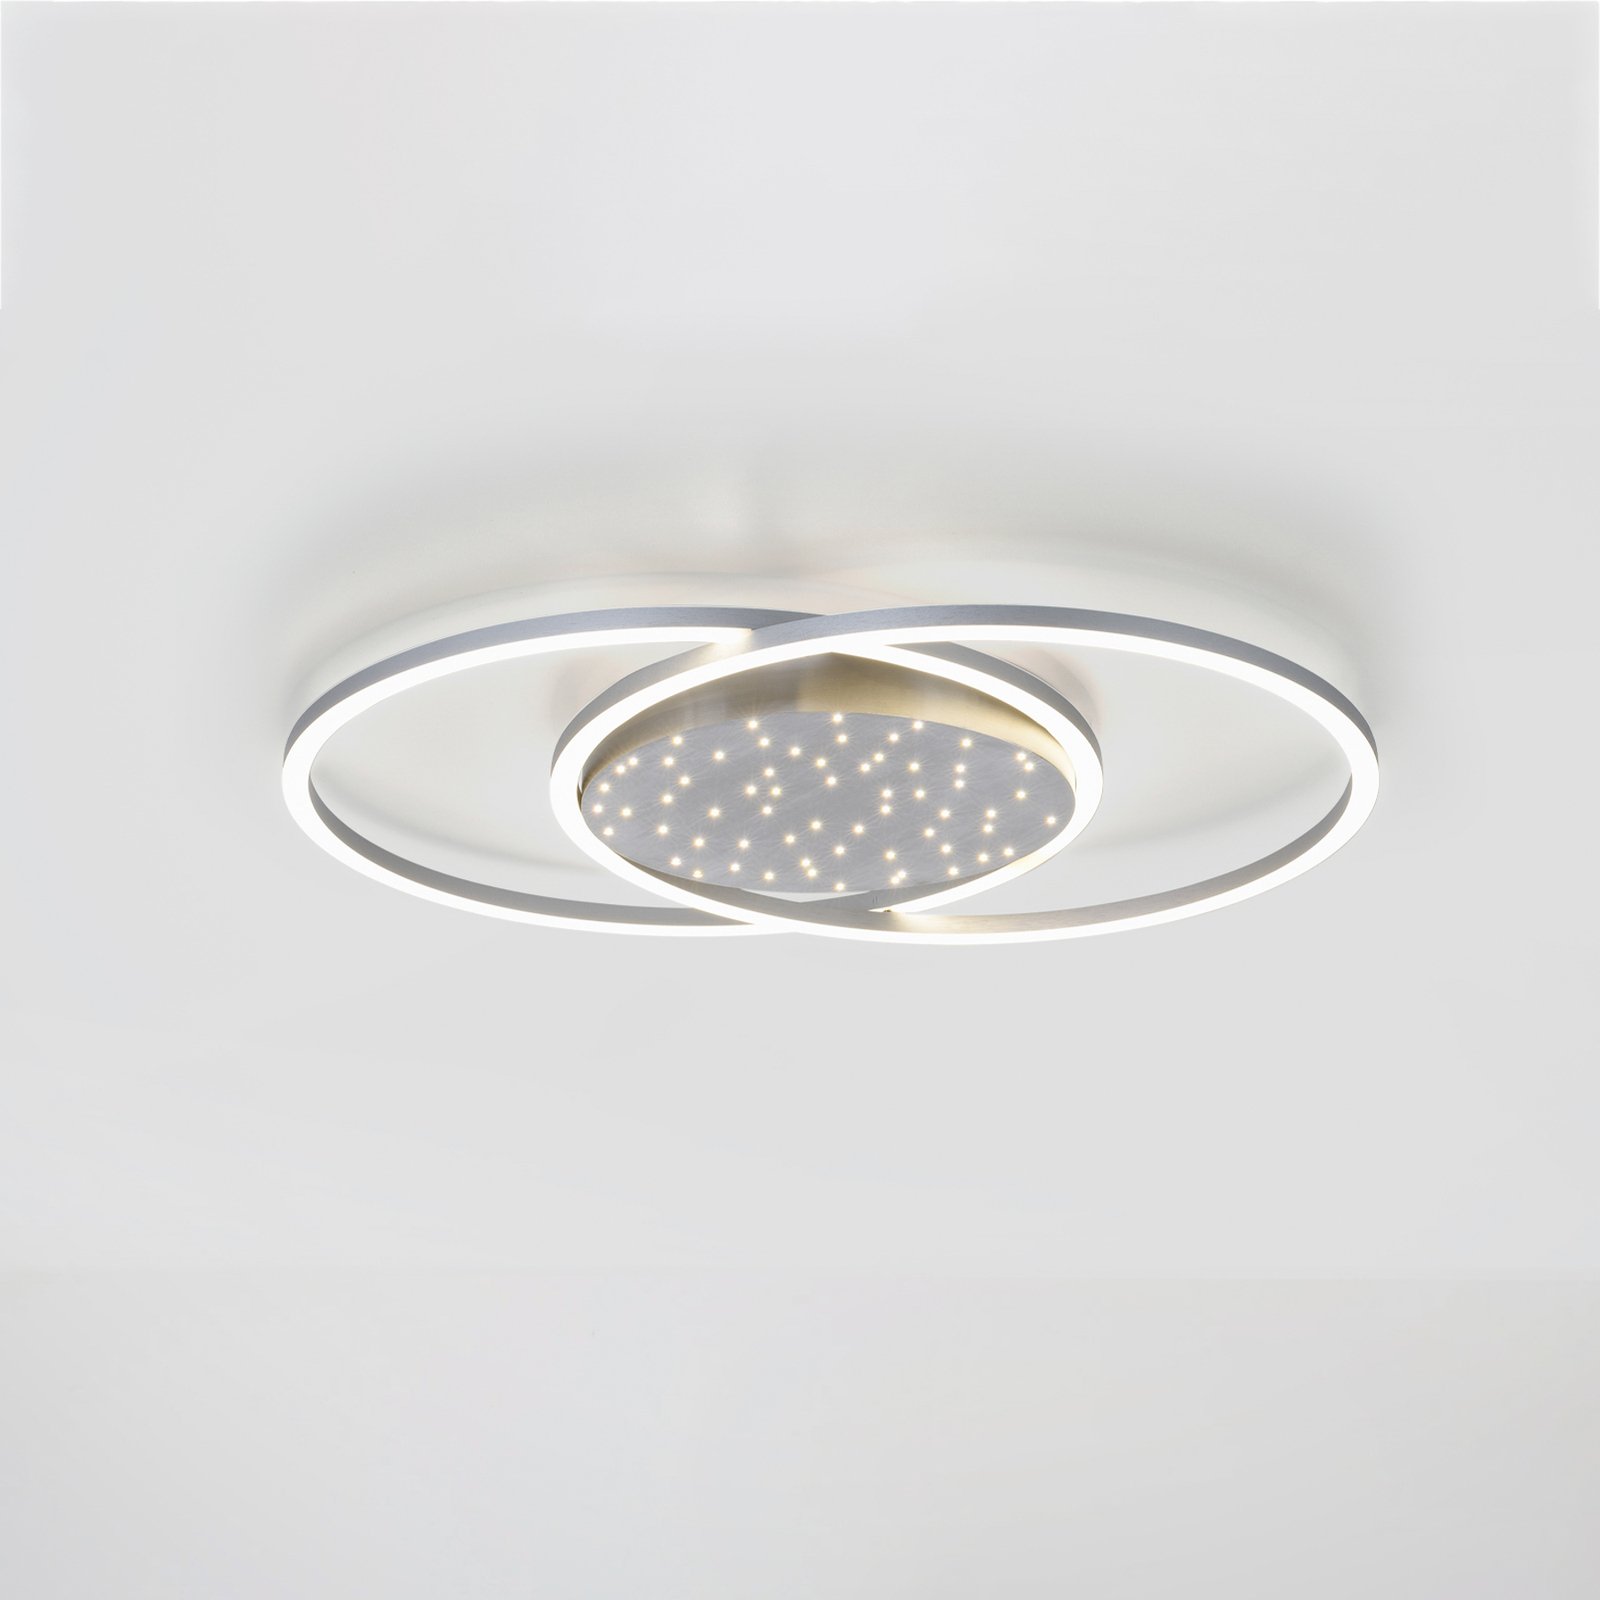 Paul Neuhaus Yuki LED stropní světlo, kulatý tvar